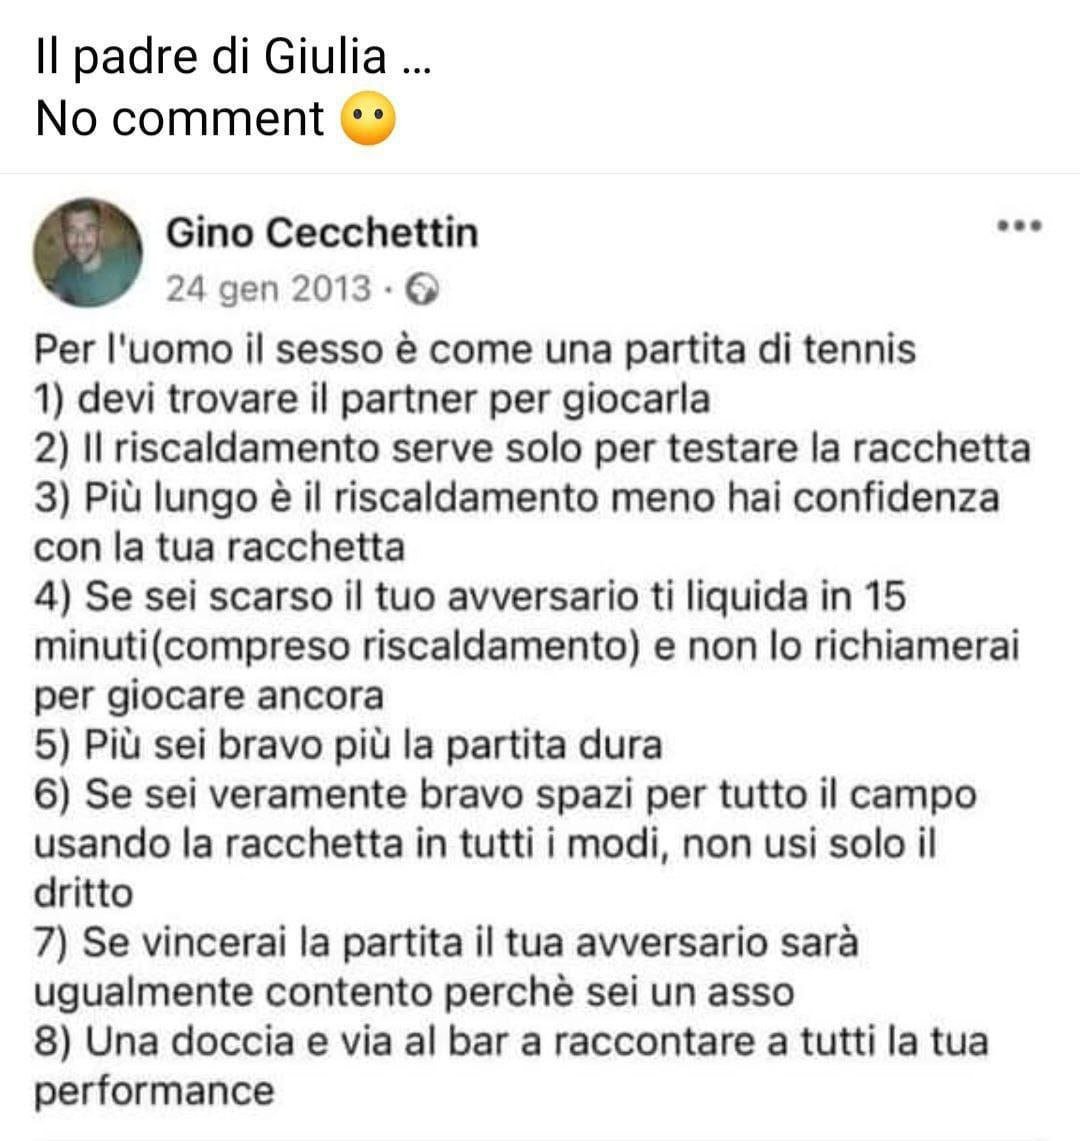 Una m.....

#GinoCecchettin #ginocecchetin #giuliacechettin